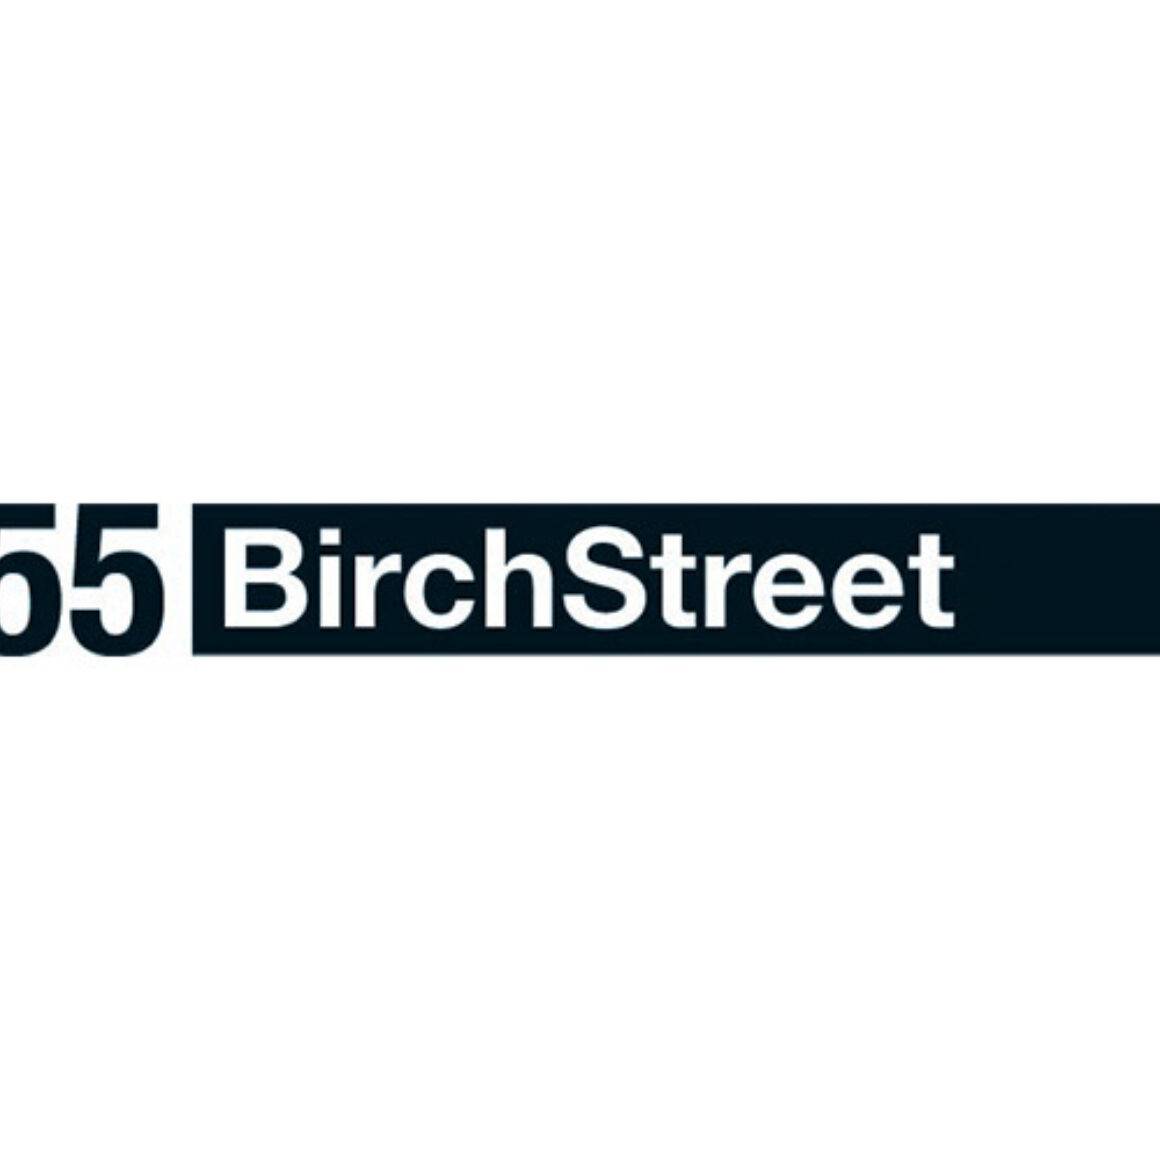 Birch streeet 1000x500